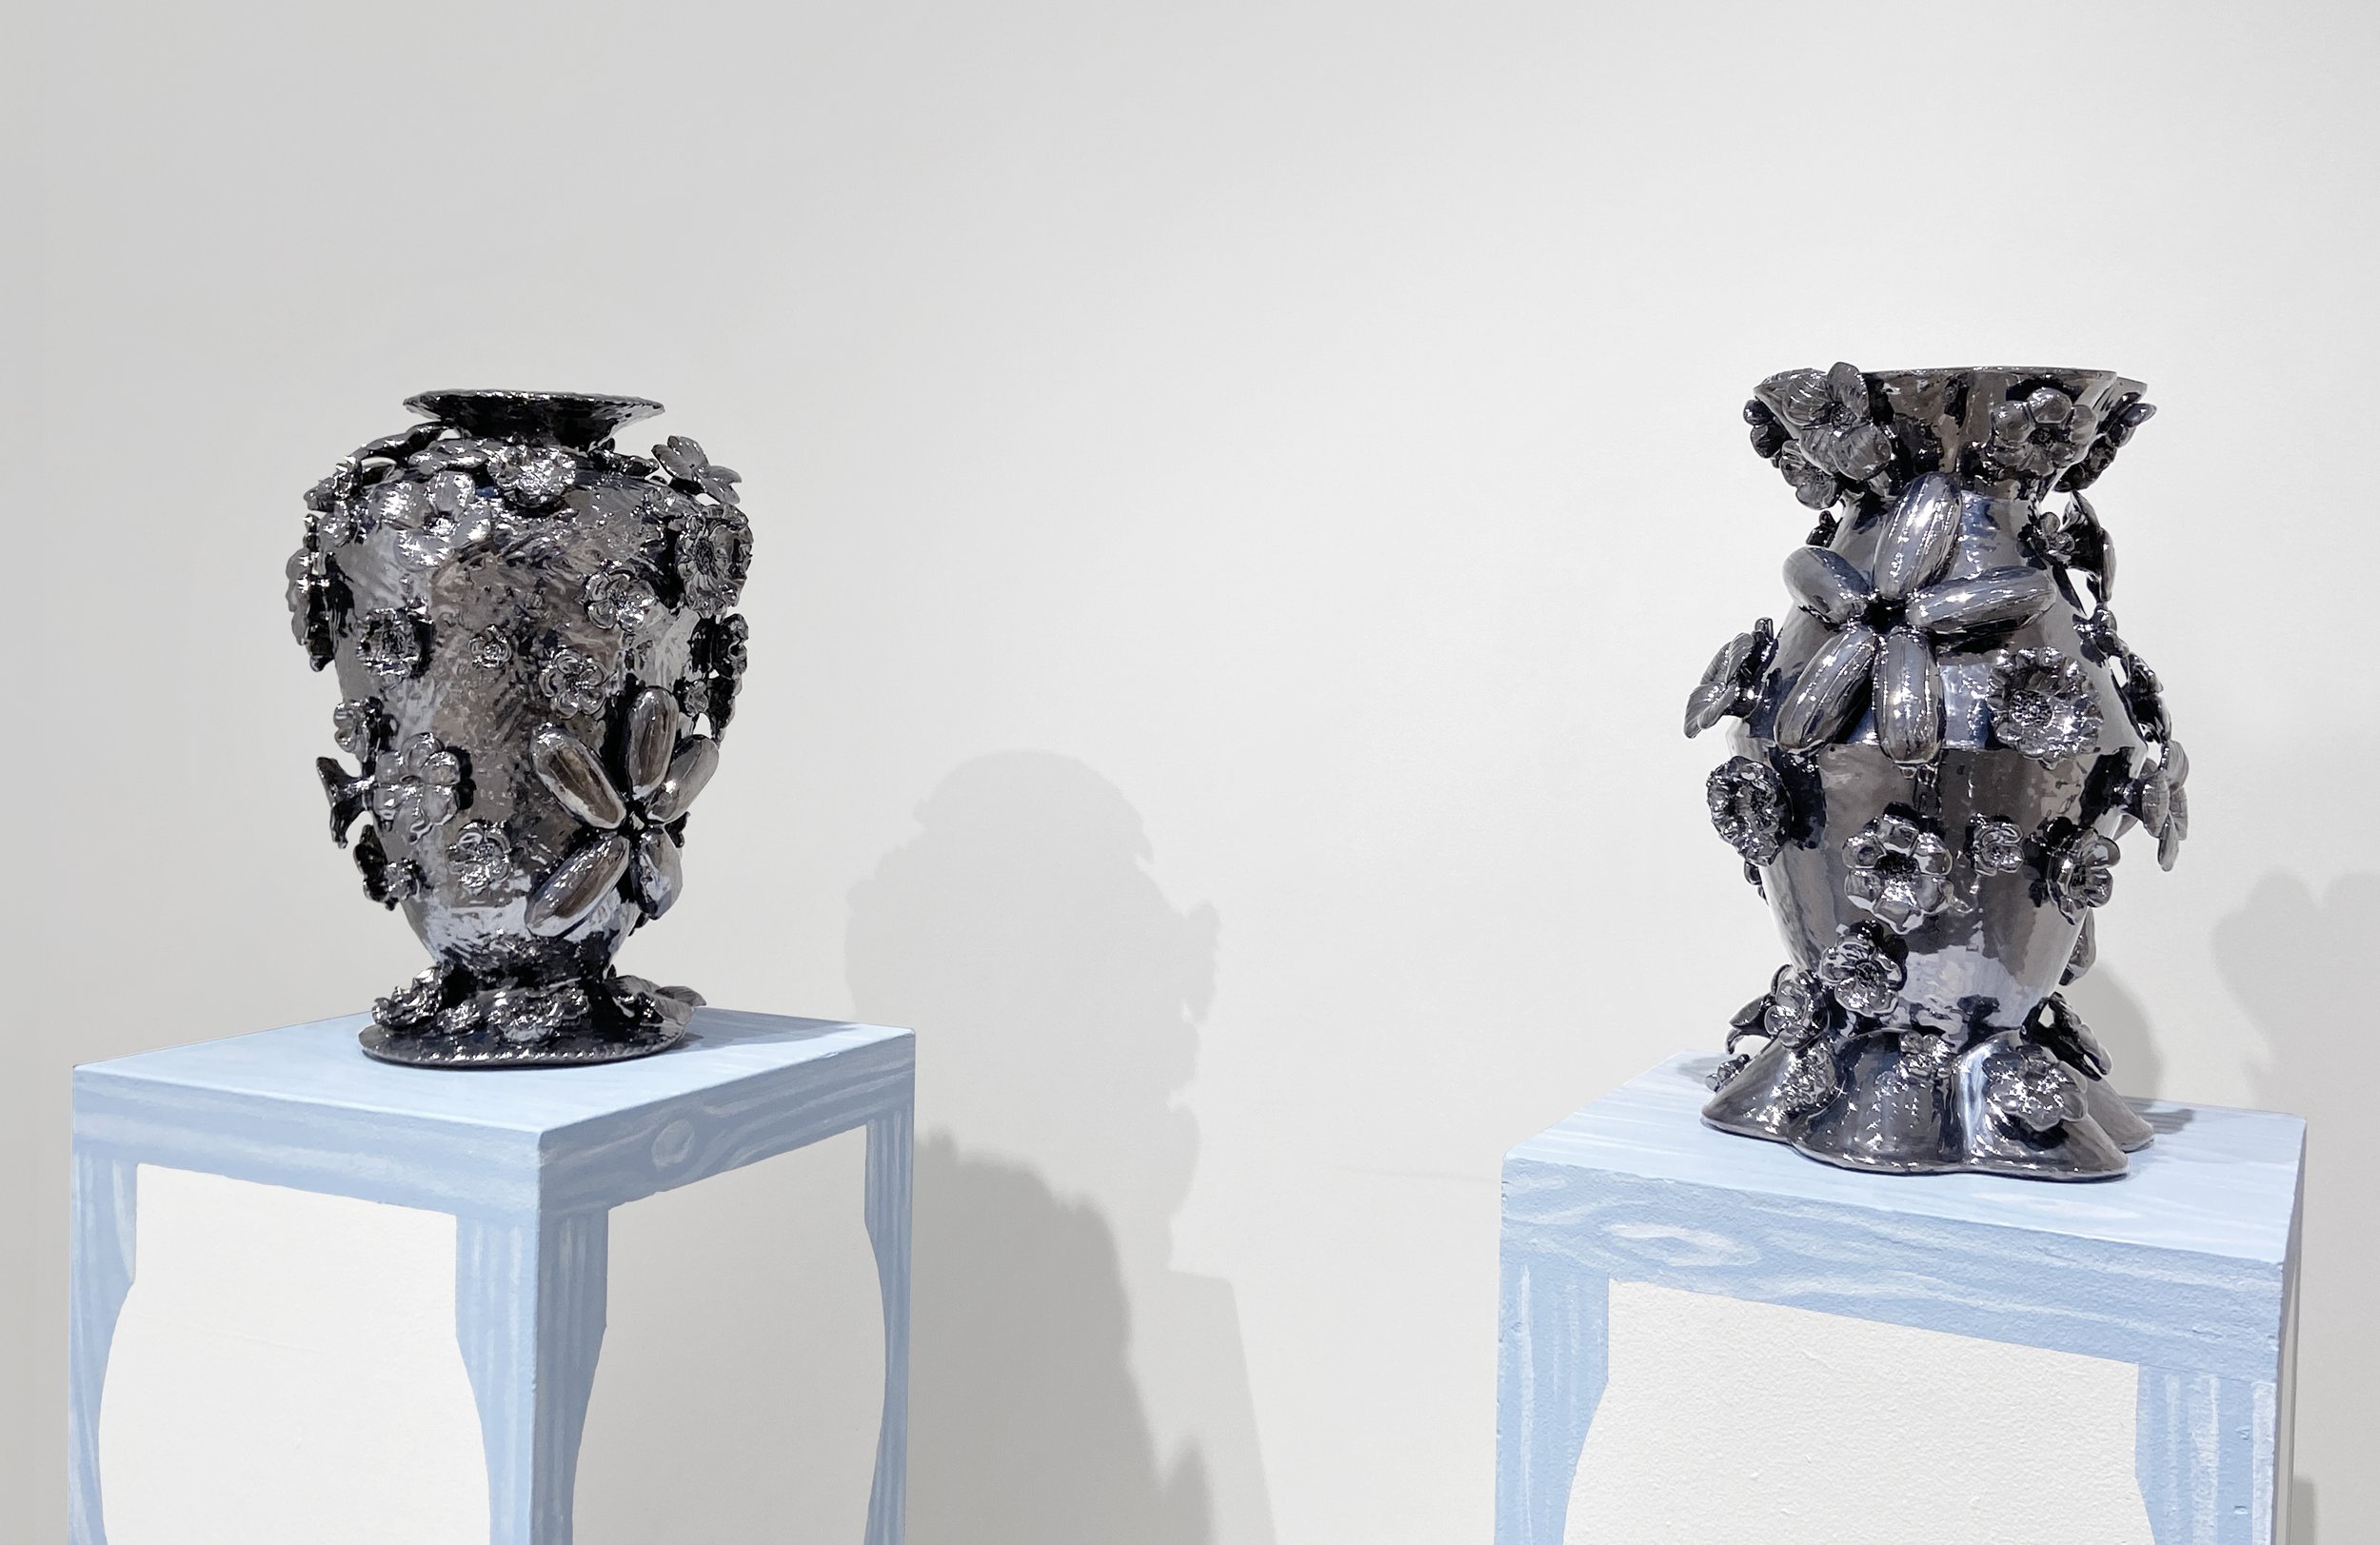  (Left) Mirror Vase 4, 2024, earthenware, glaze, 18” x 12” x 12”  (Right) Mirror Vase 2, 2024, earthenware, glaze, 17.5” x 12” x 12” 